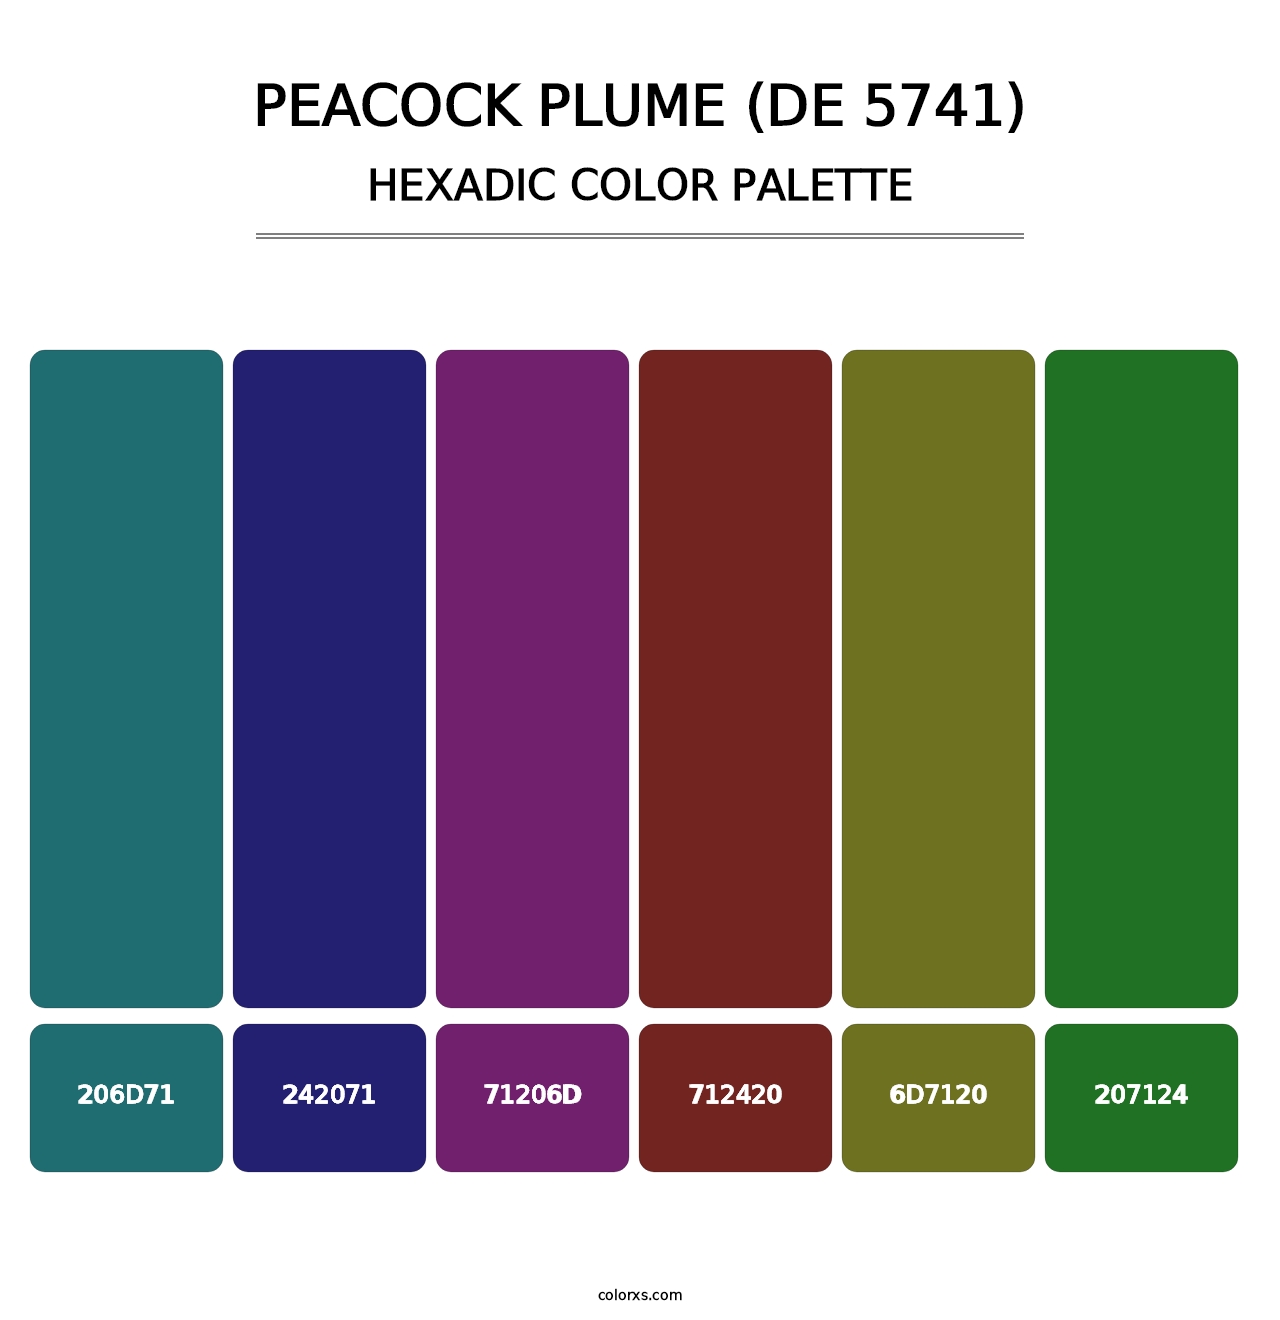 Peacock Plume (DE 5741) - Hexadic Color Palette